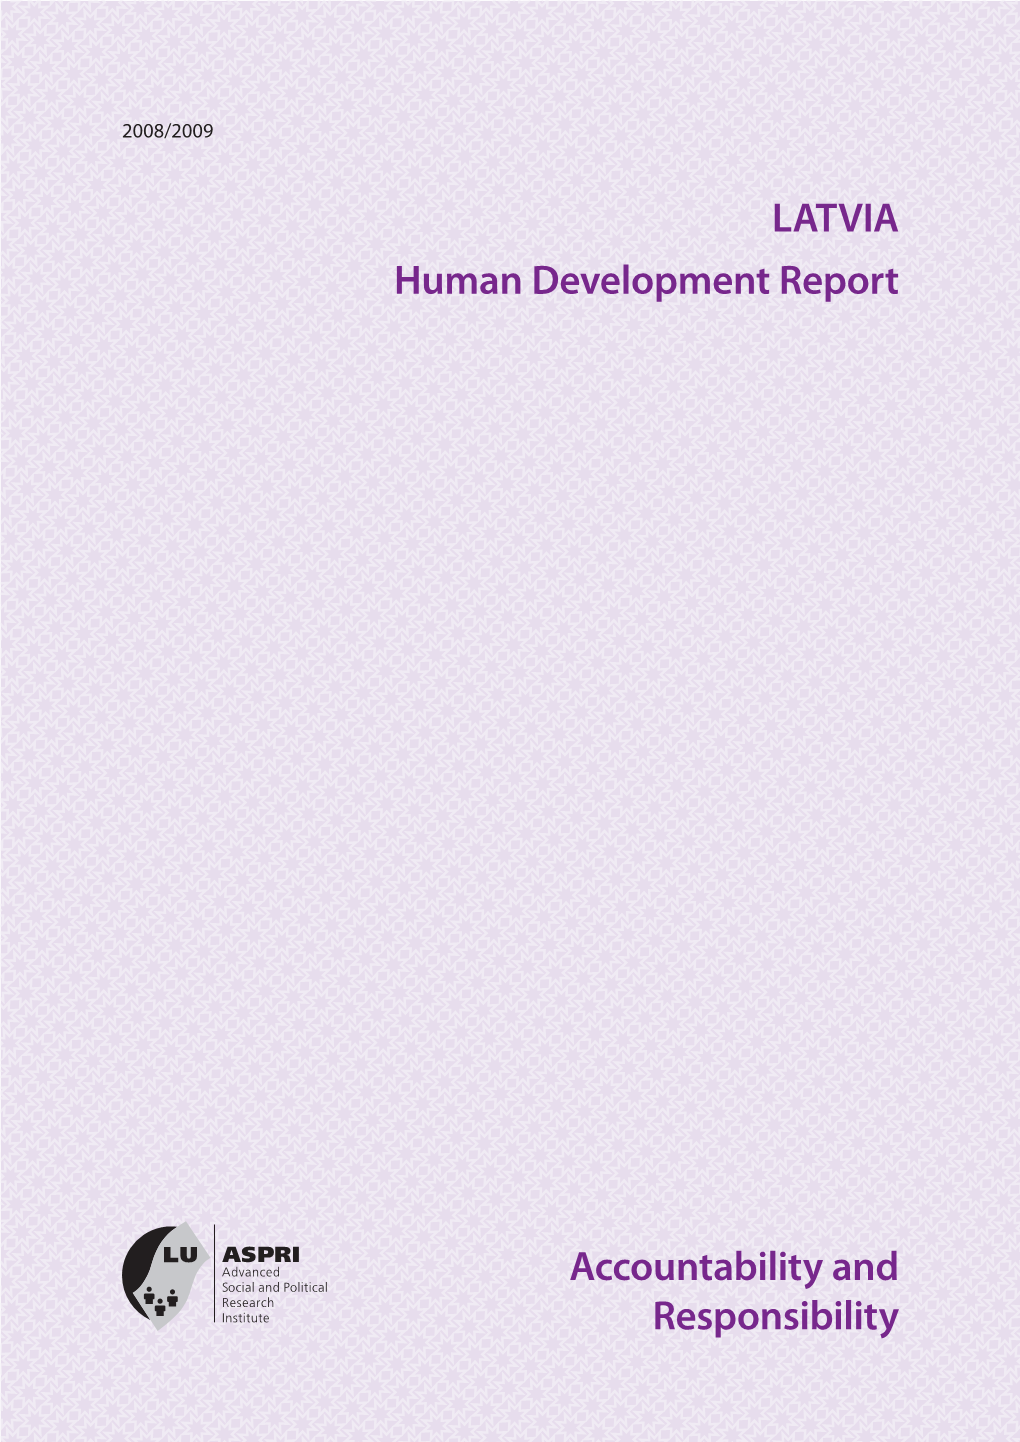 LATVIA Human Development Report Accountability And